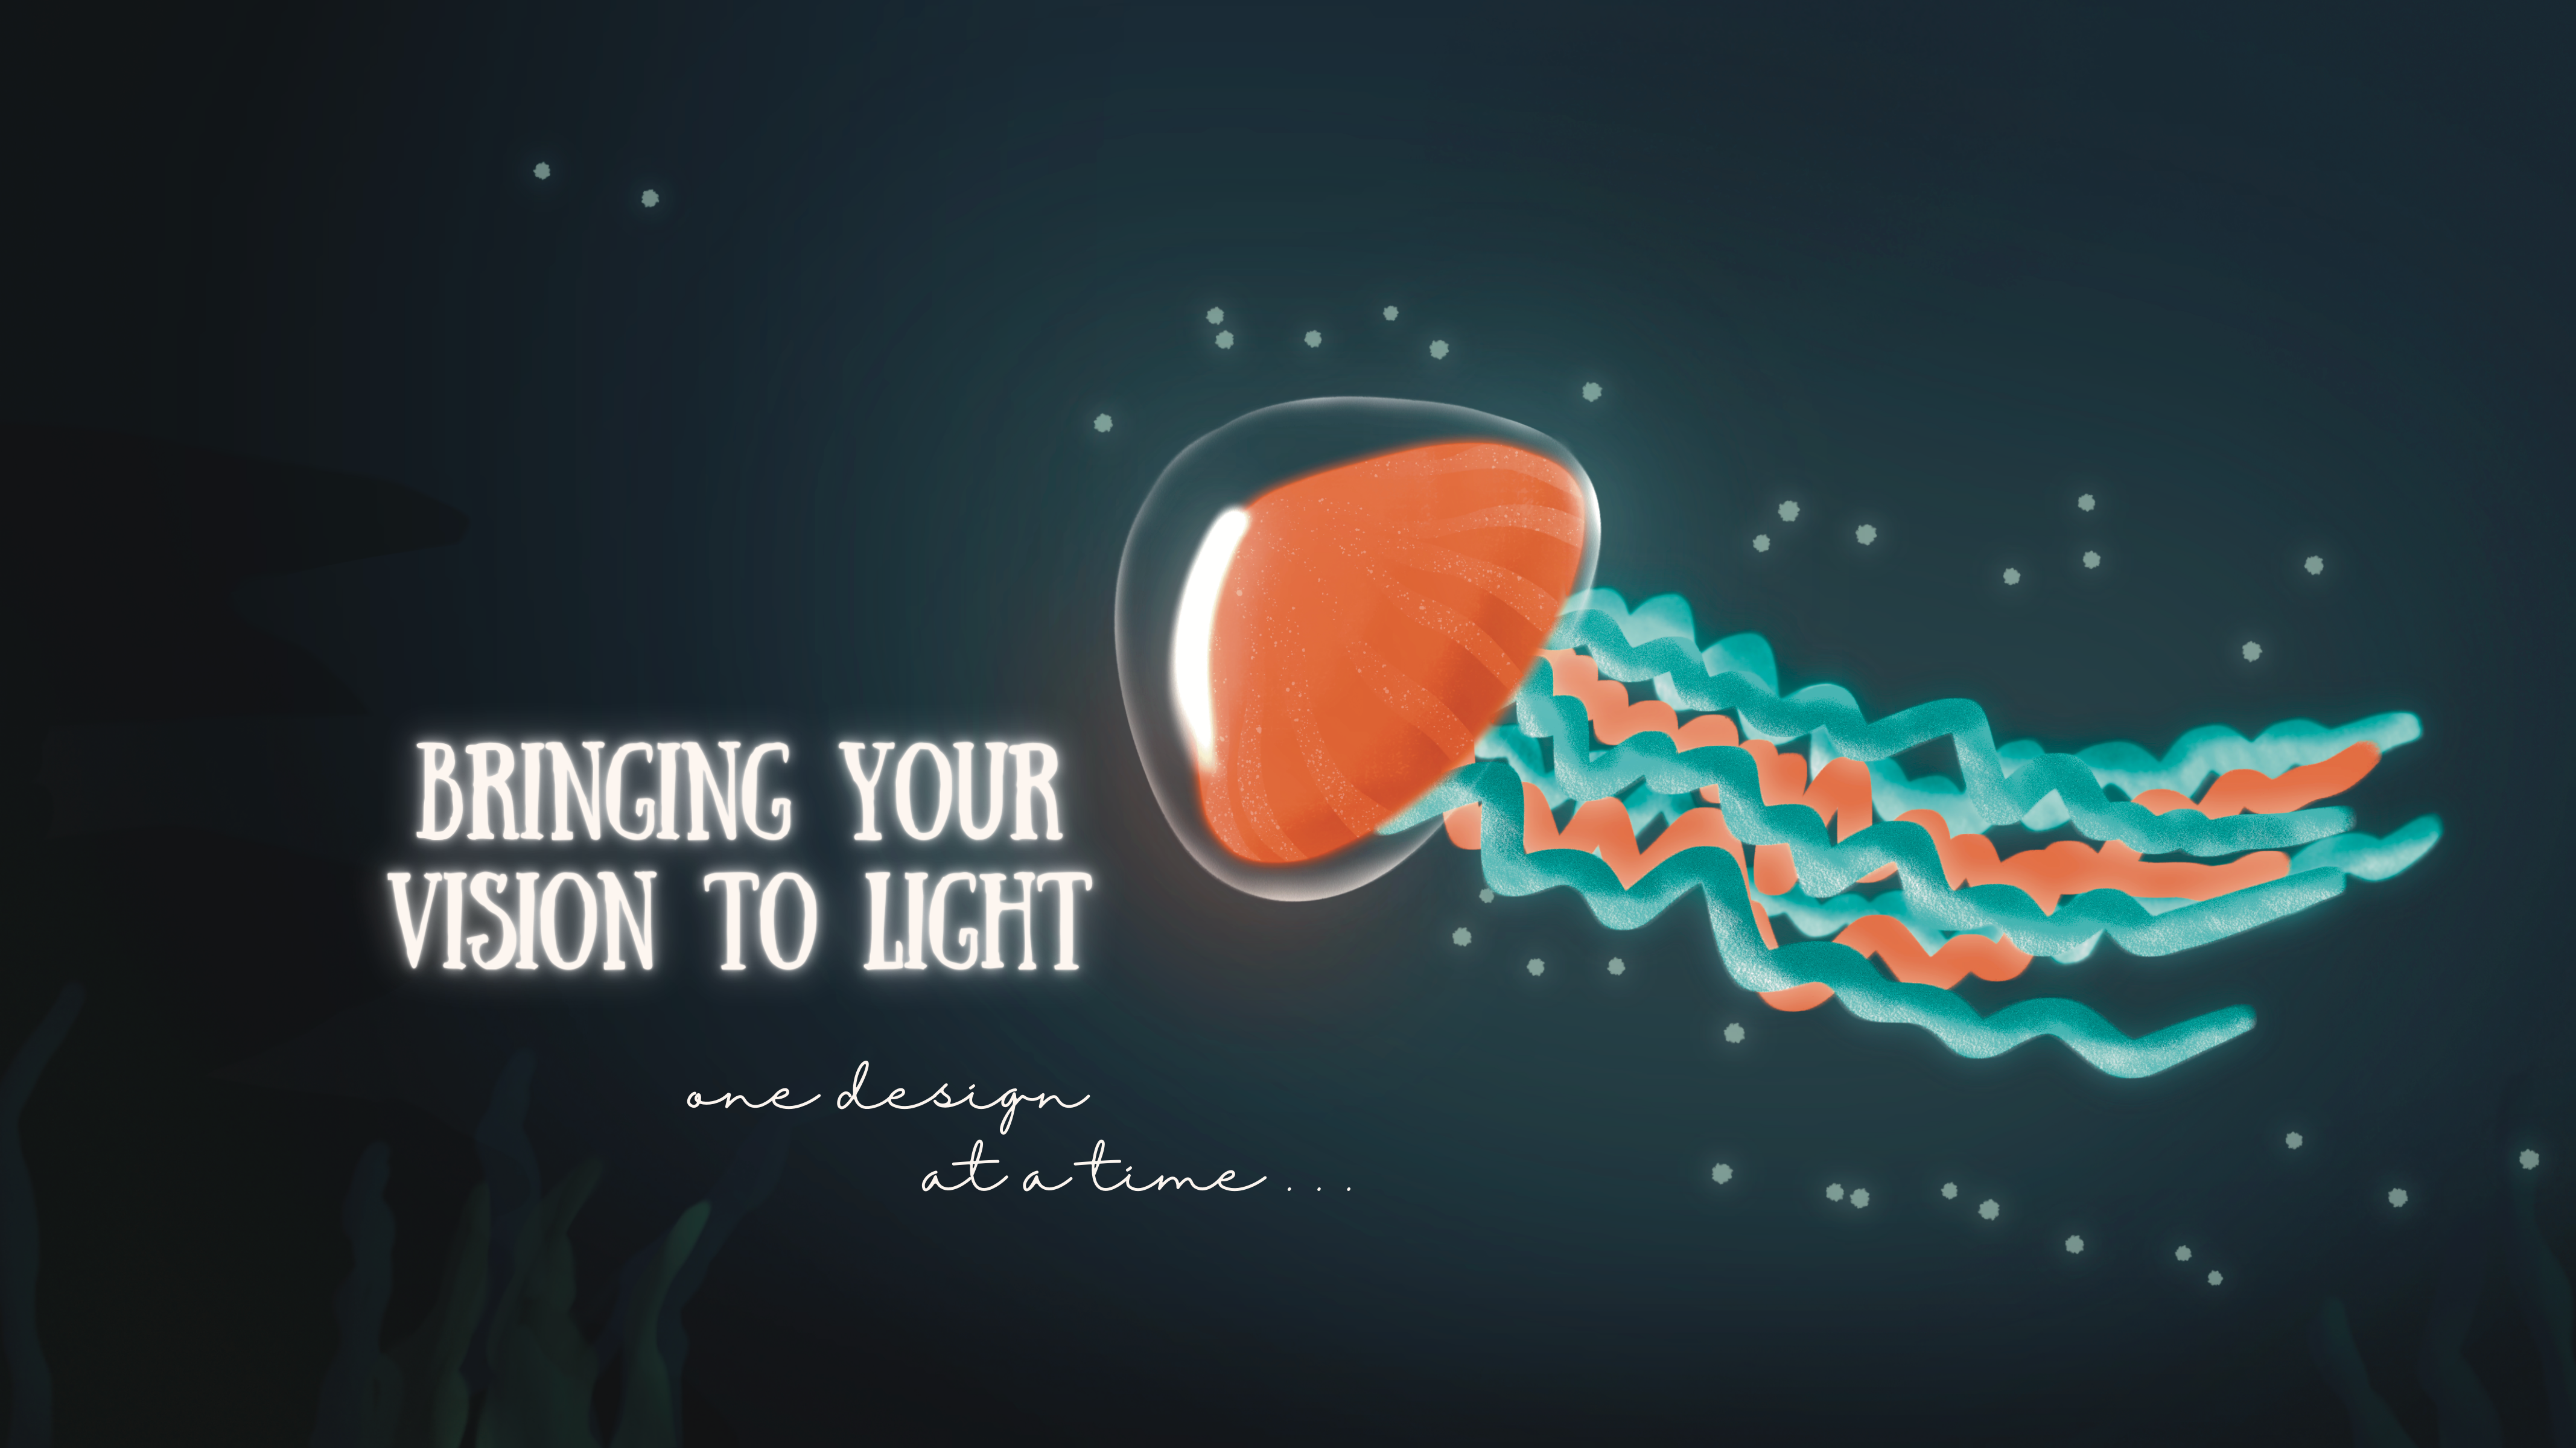 Maria von Hatten Digital Illustration of a Jellyfish "Bringing Your Vision to Light"